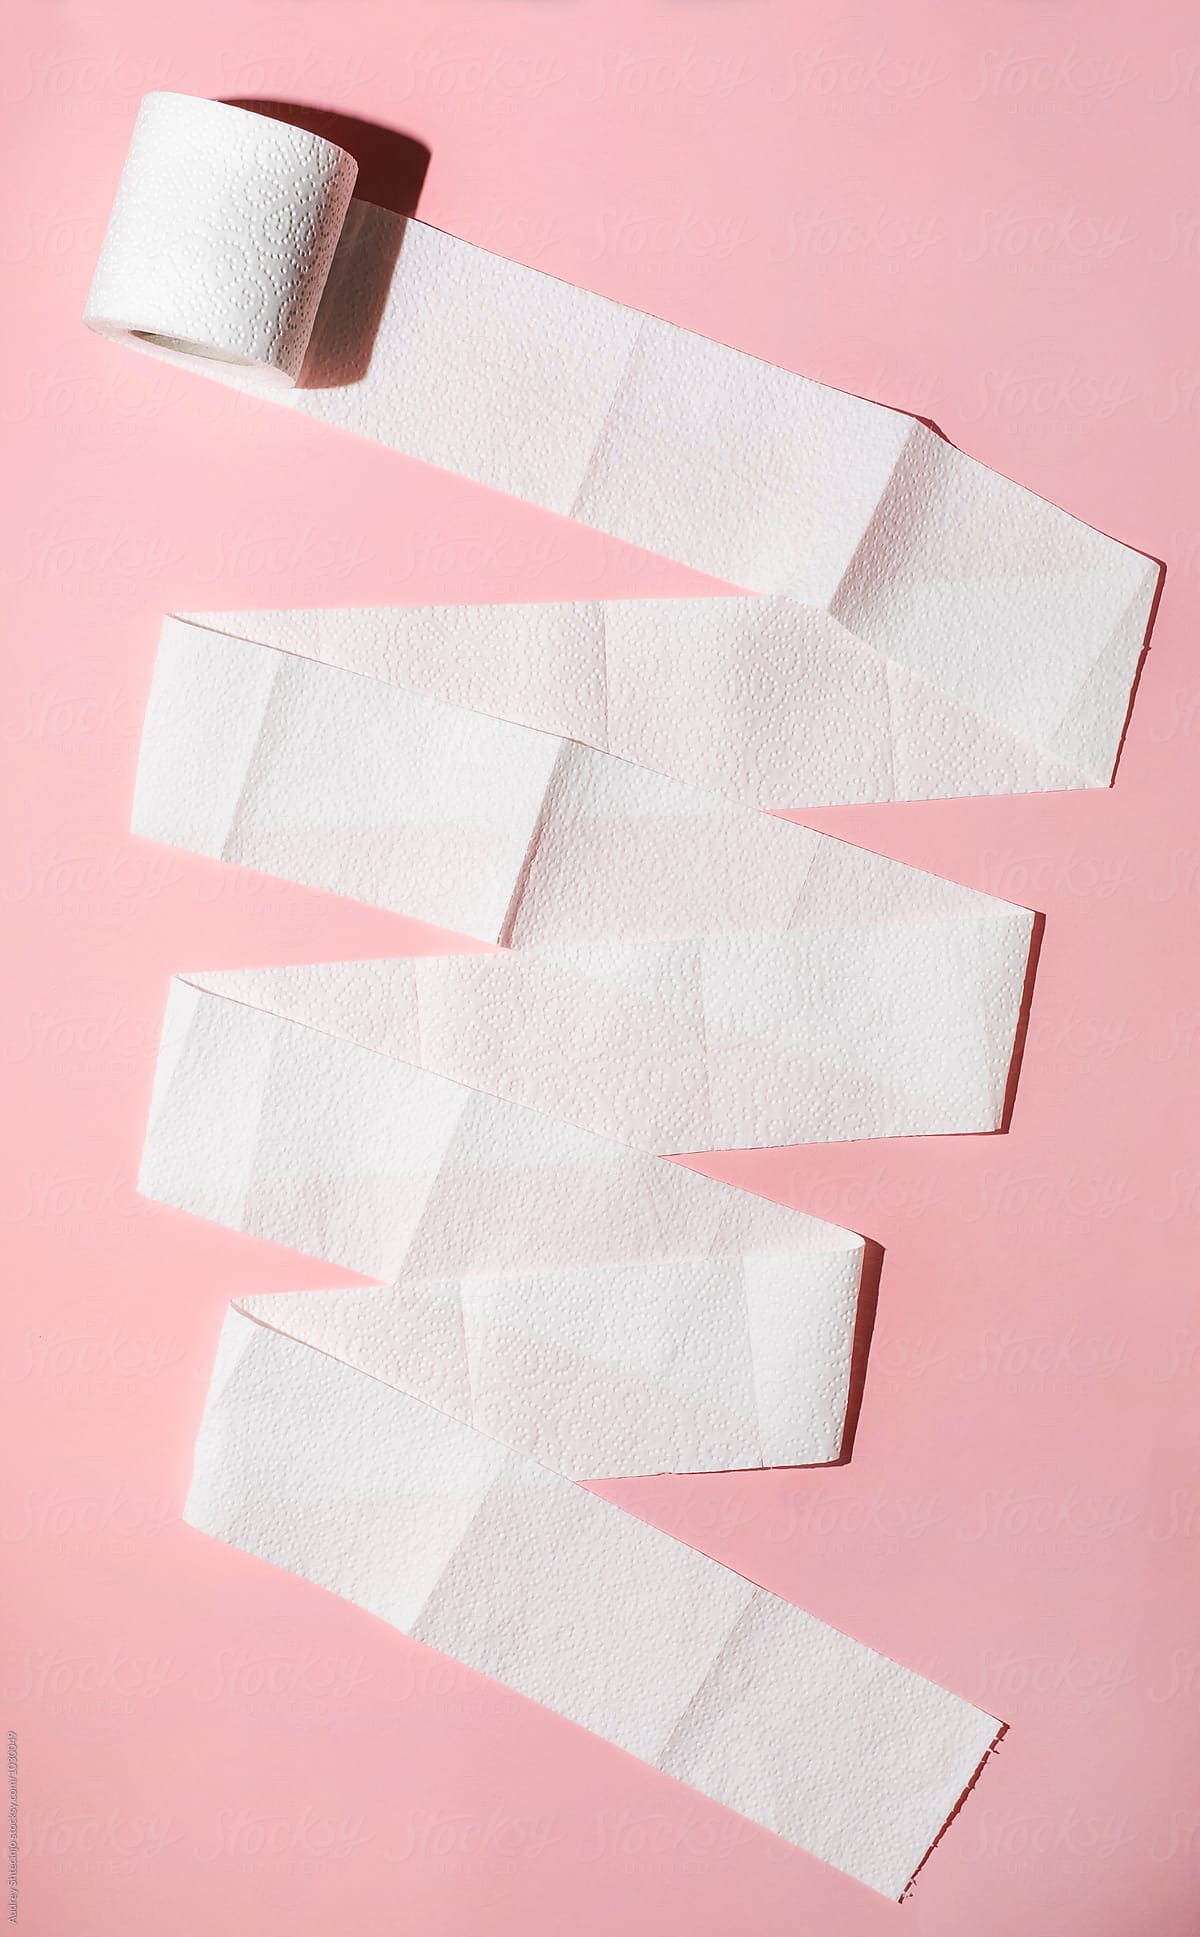 Toilet Paper Rolls On Pink Background. by Stocksy Contributor AUDSHULE -  Stocksy